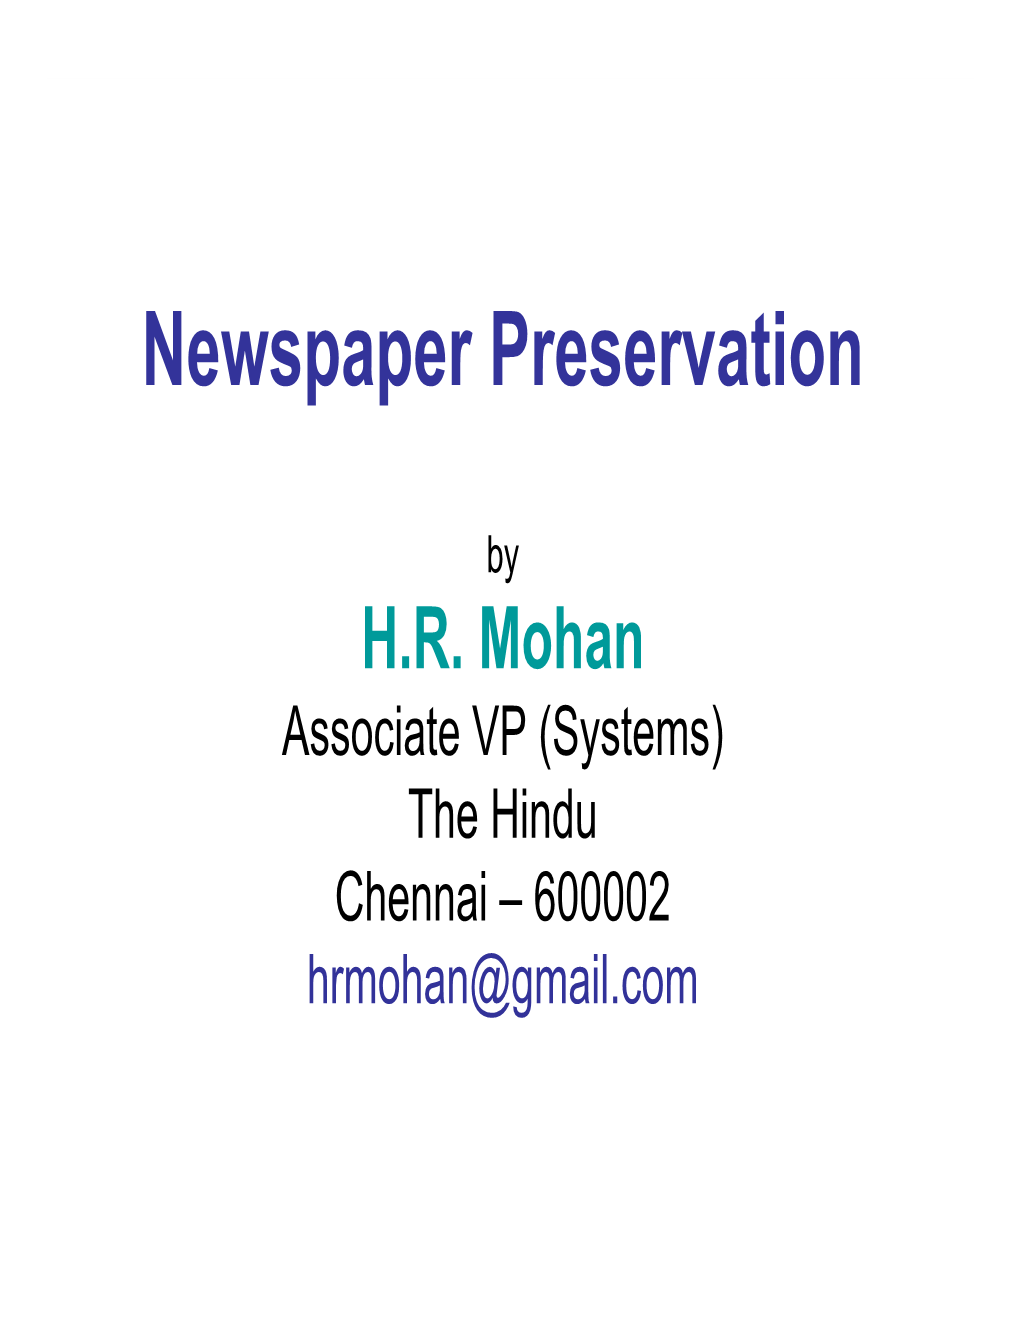 Revised the Hindu Newspaper Preservation.Pdf